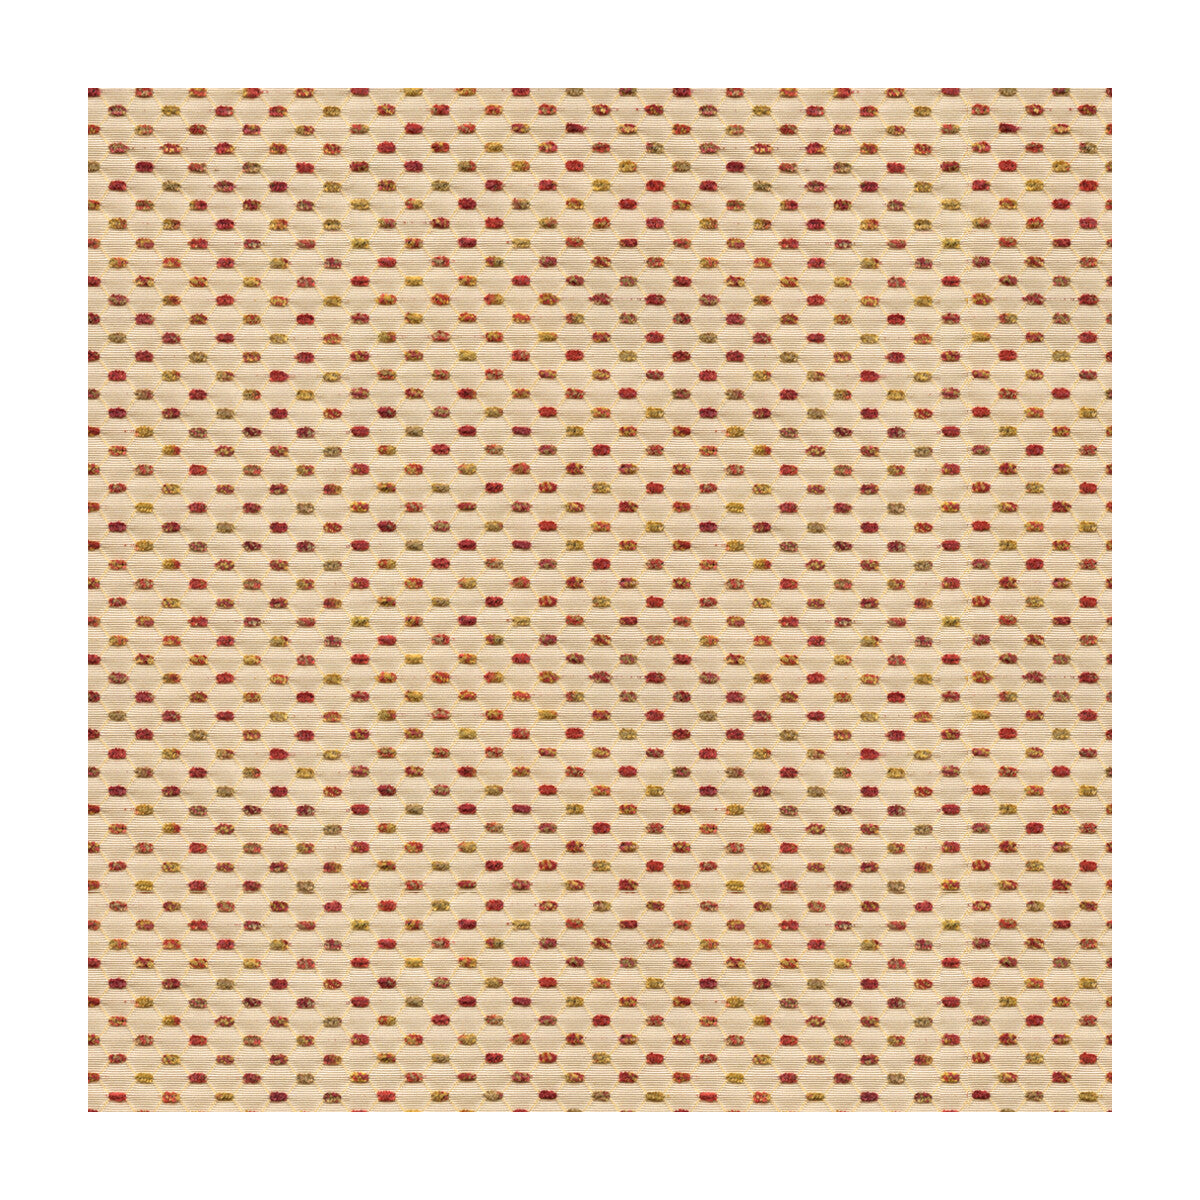 Kravet Smart fabric in 30631-1619 color - pattern 30631.1619.0 - by Kravet Smart